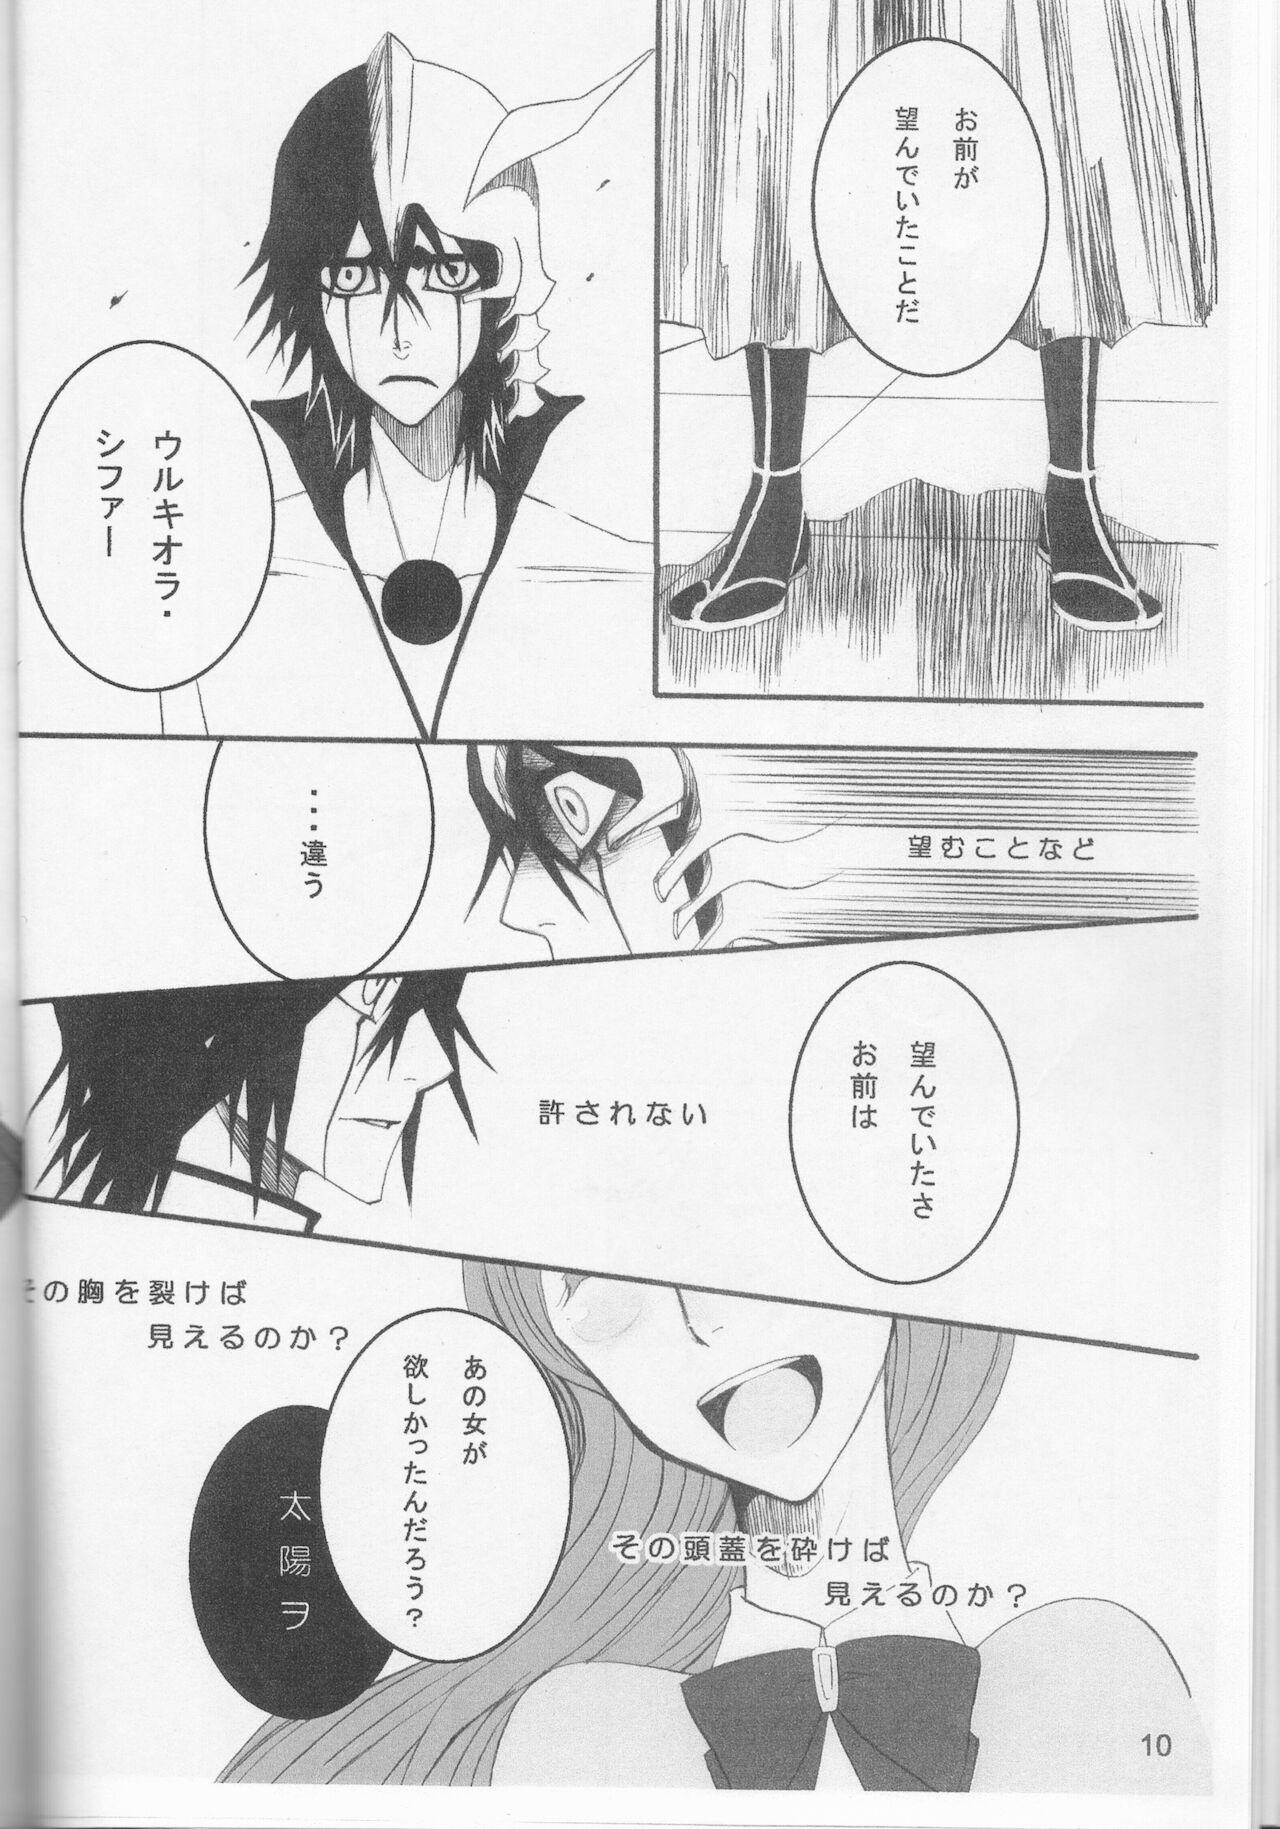 Climax Omae ga Sekai o Kowashitainara. - Bleach Spain - Page 10